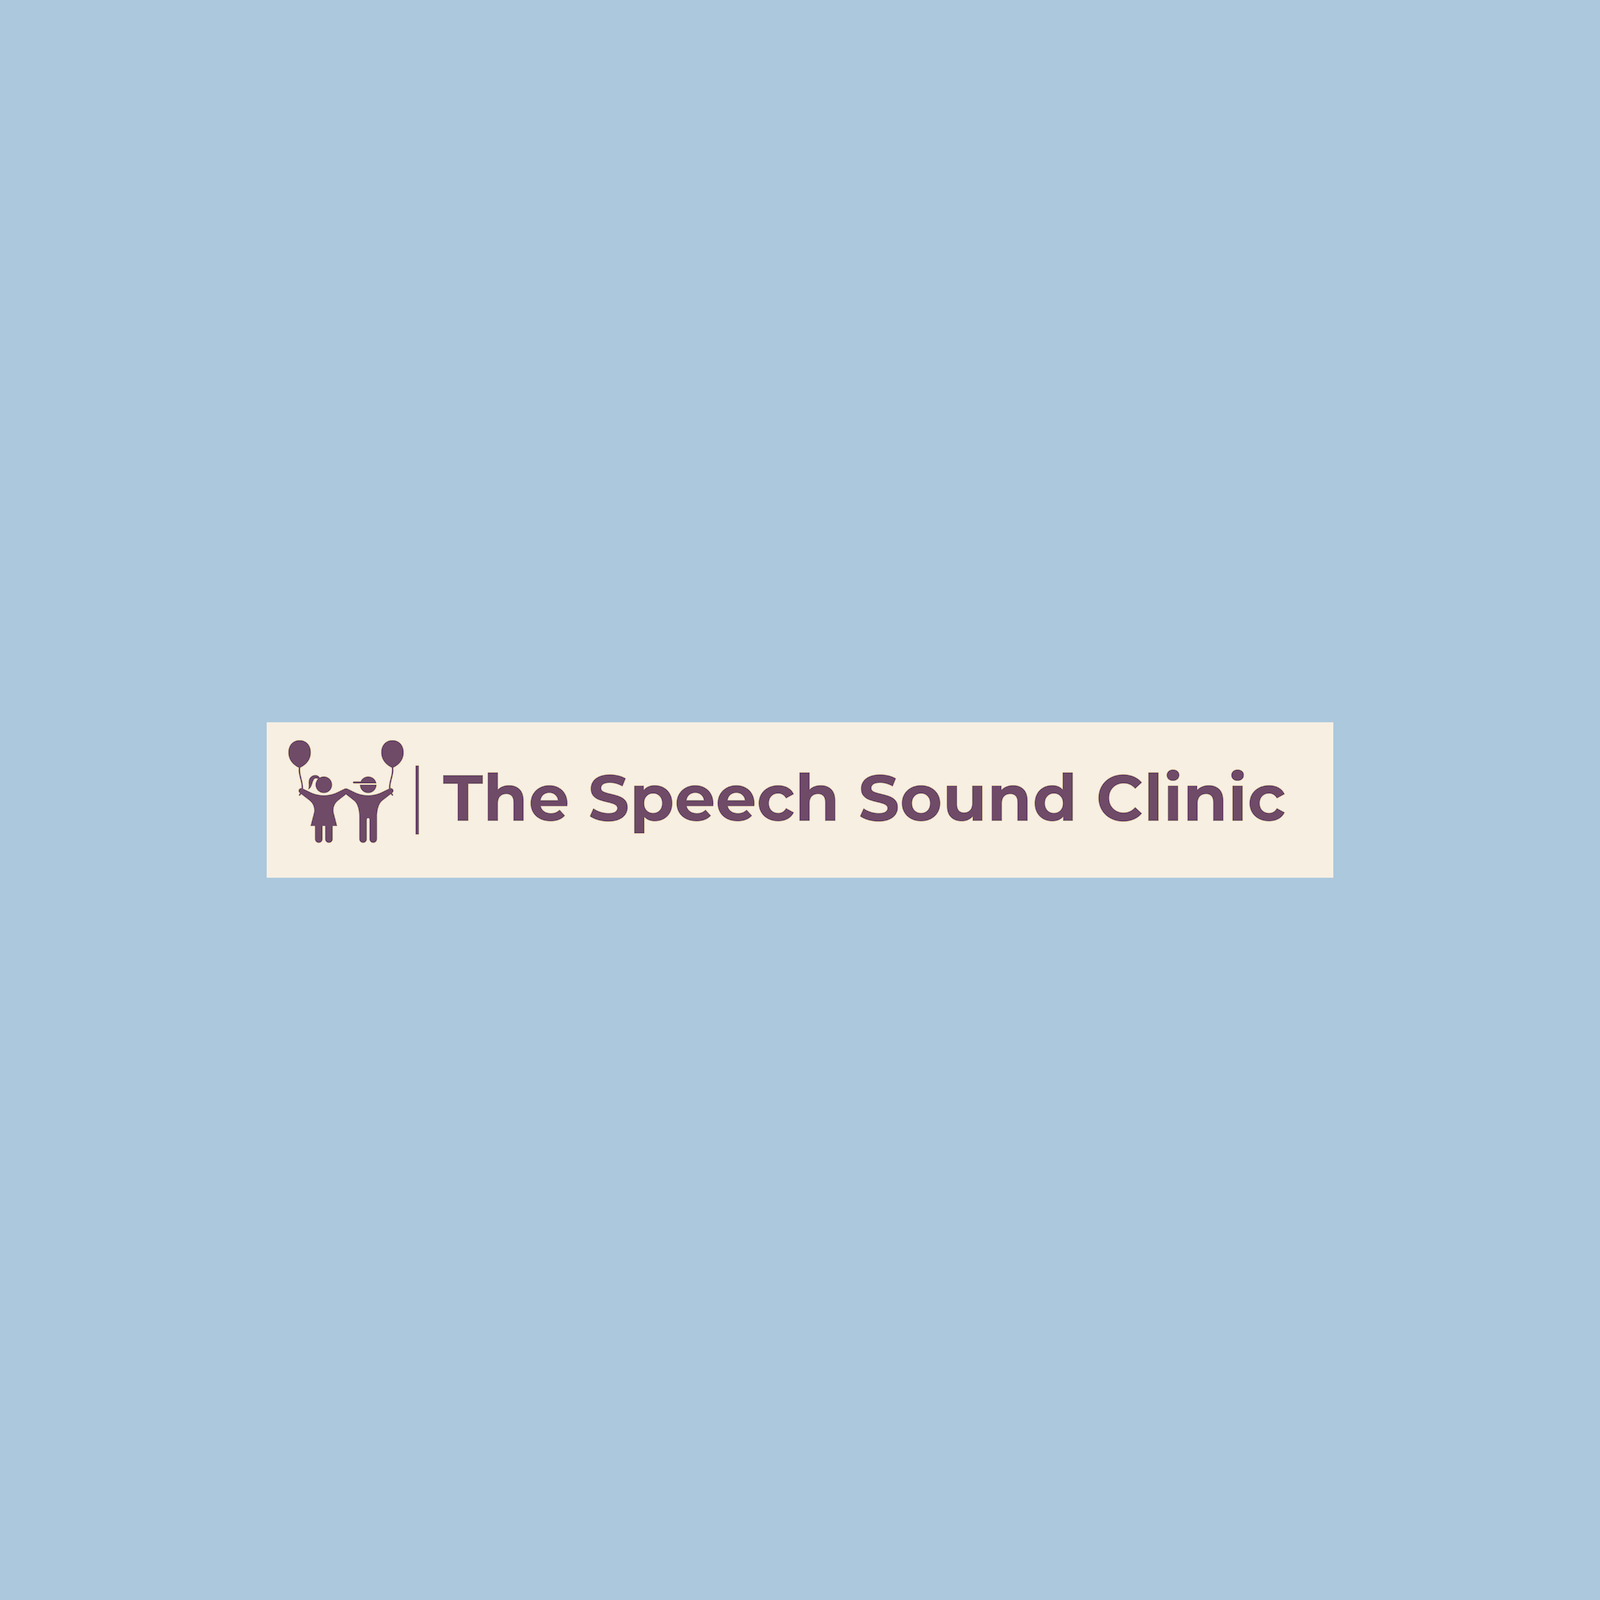 The Speech Sound Clinic